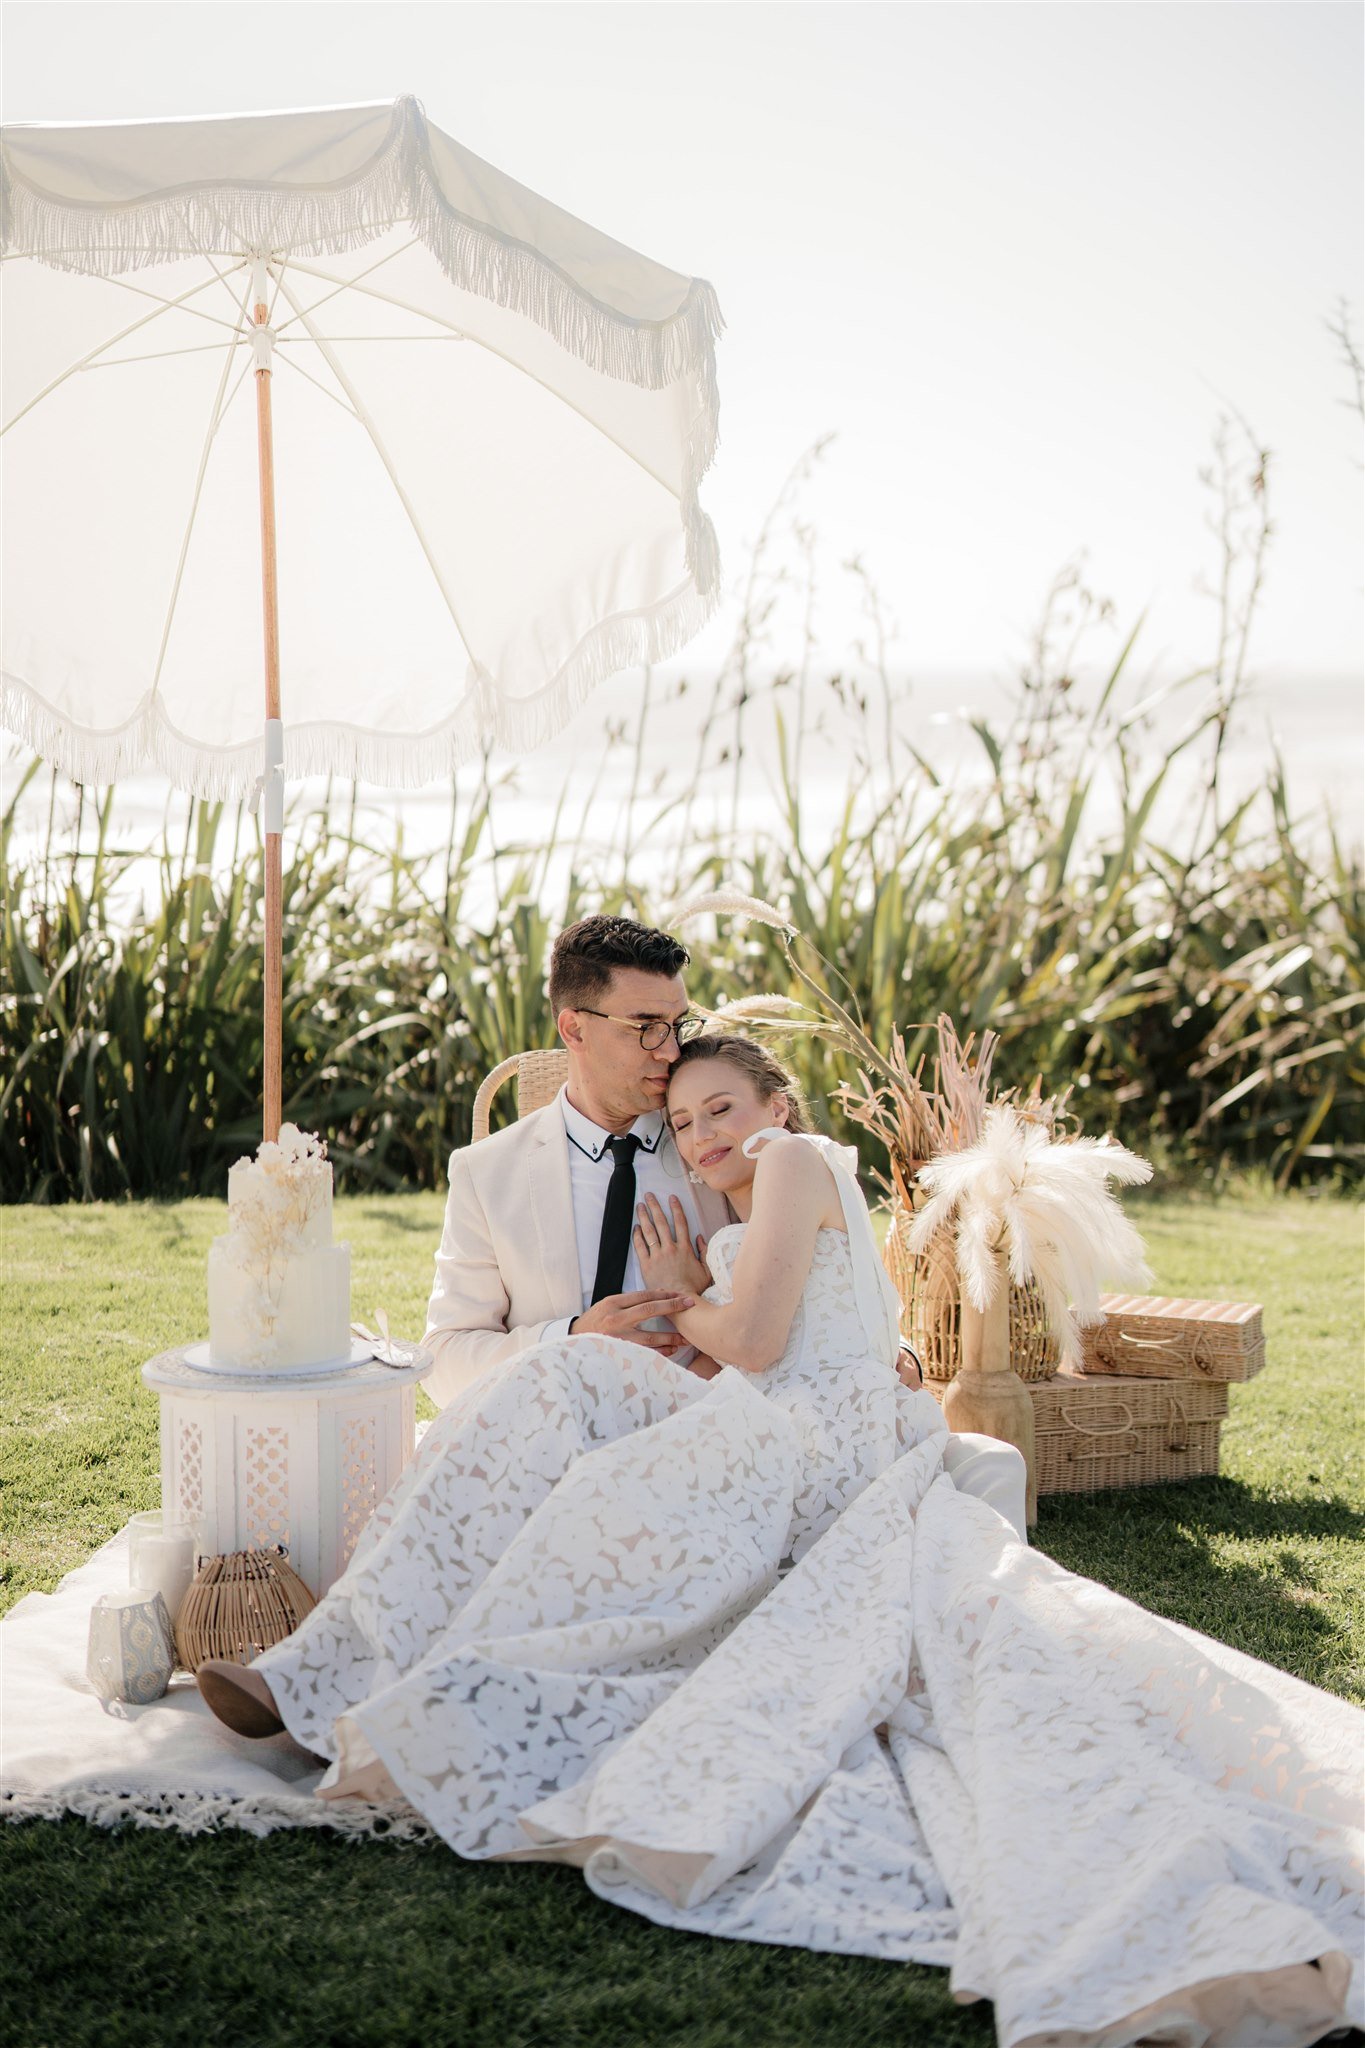 castaways-NZ-new-zealand-auckland-wedding-photographer-photography-videography-film-dear-white-productions-best-venue-waiuku-engagement-elopement-style-beach-intimate (182).jpg